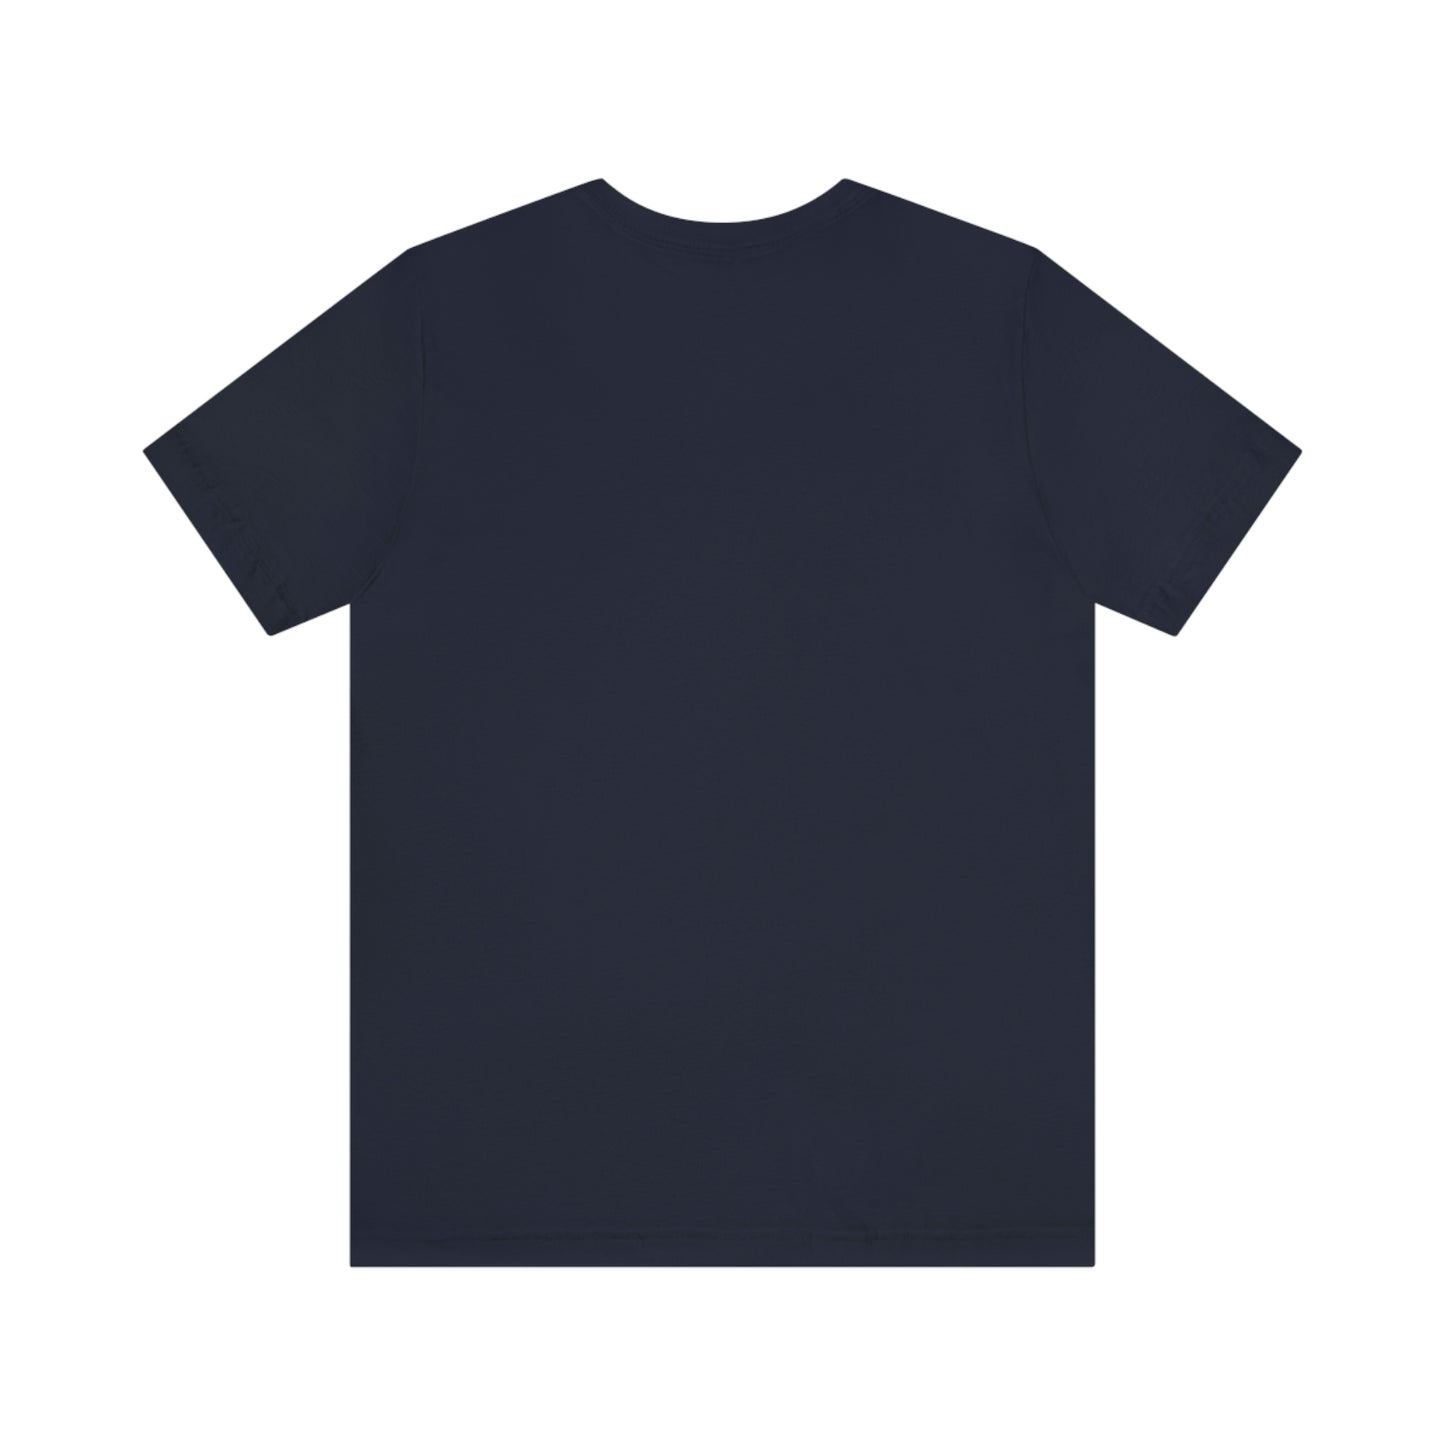 Peace, Love & Ducking Unisex Short Sleeve T-Shirt